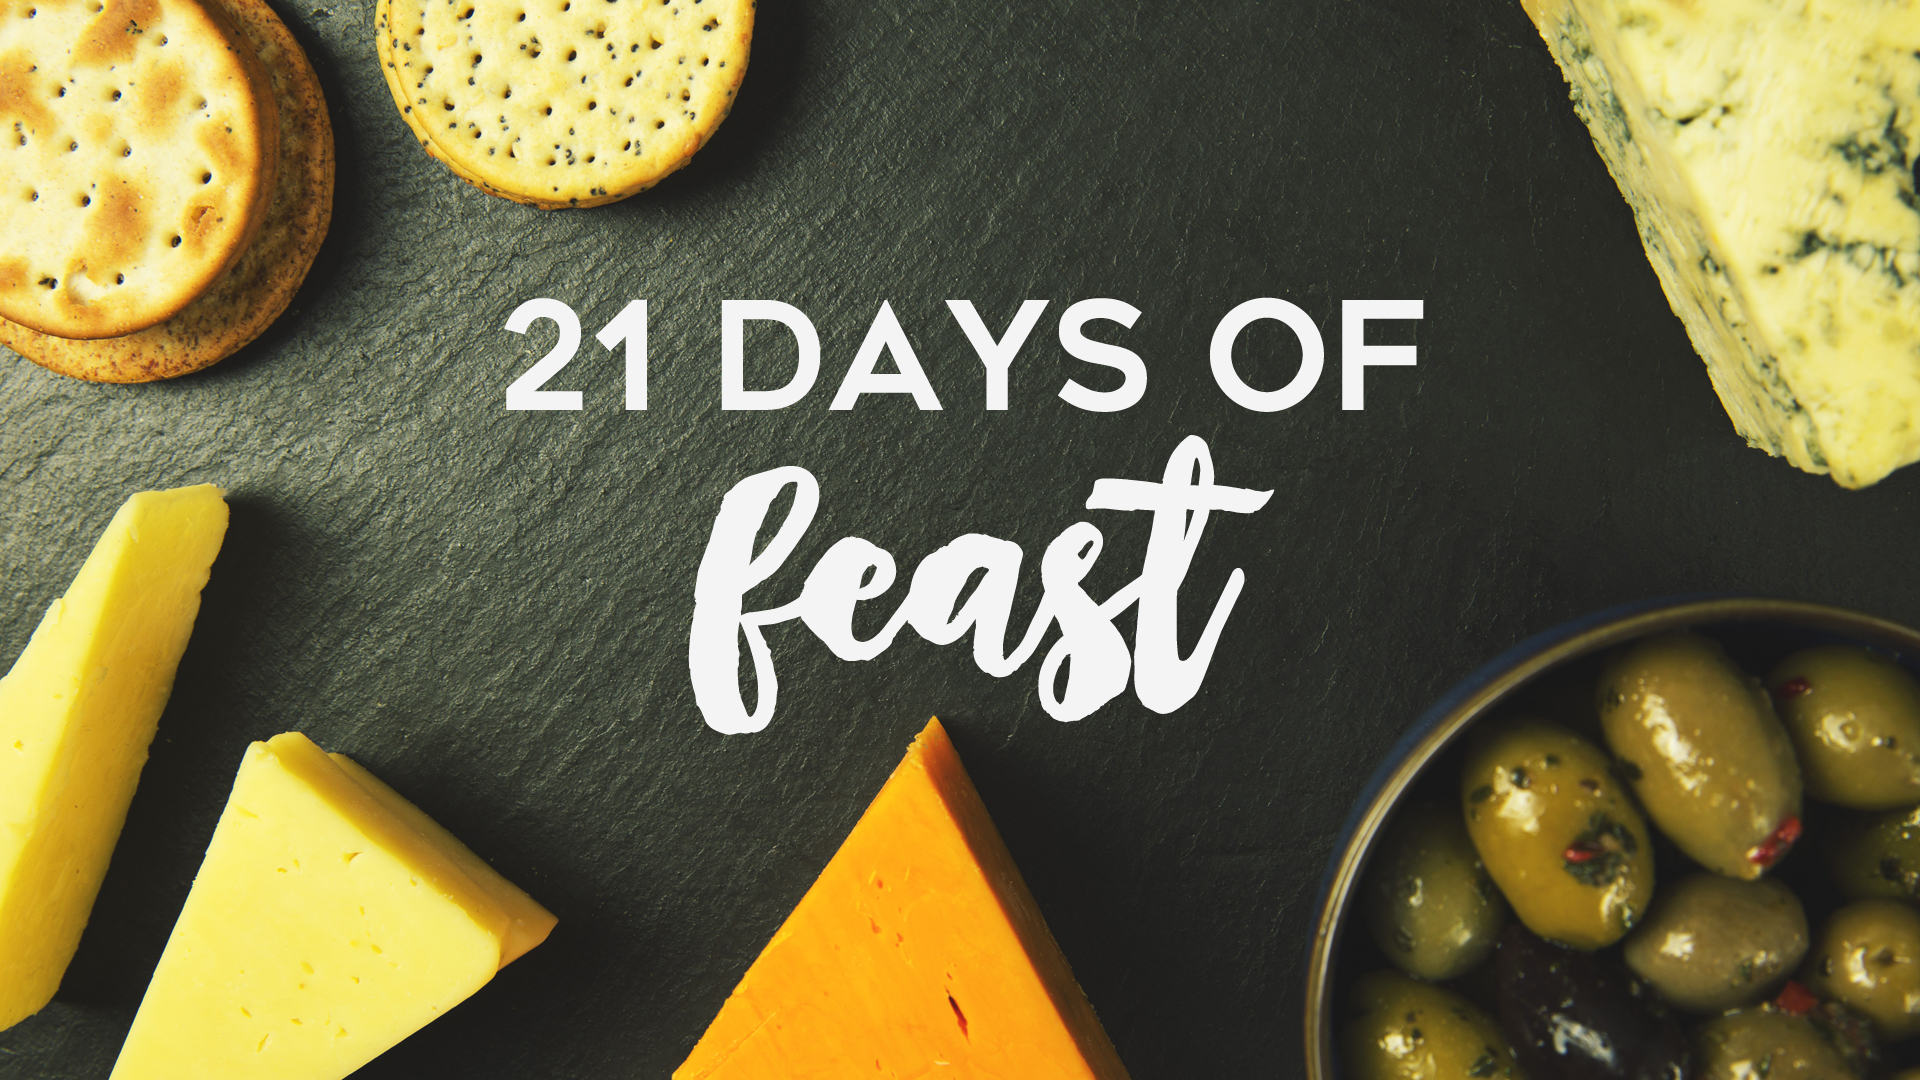 21 Days of Feast: Feast of the Unleavened Bread